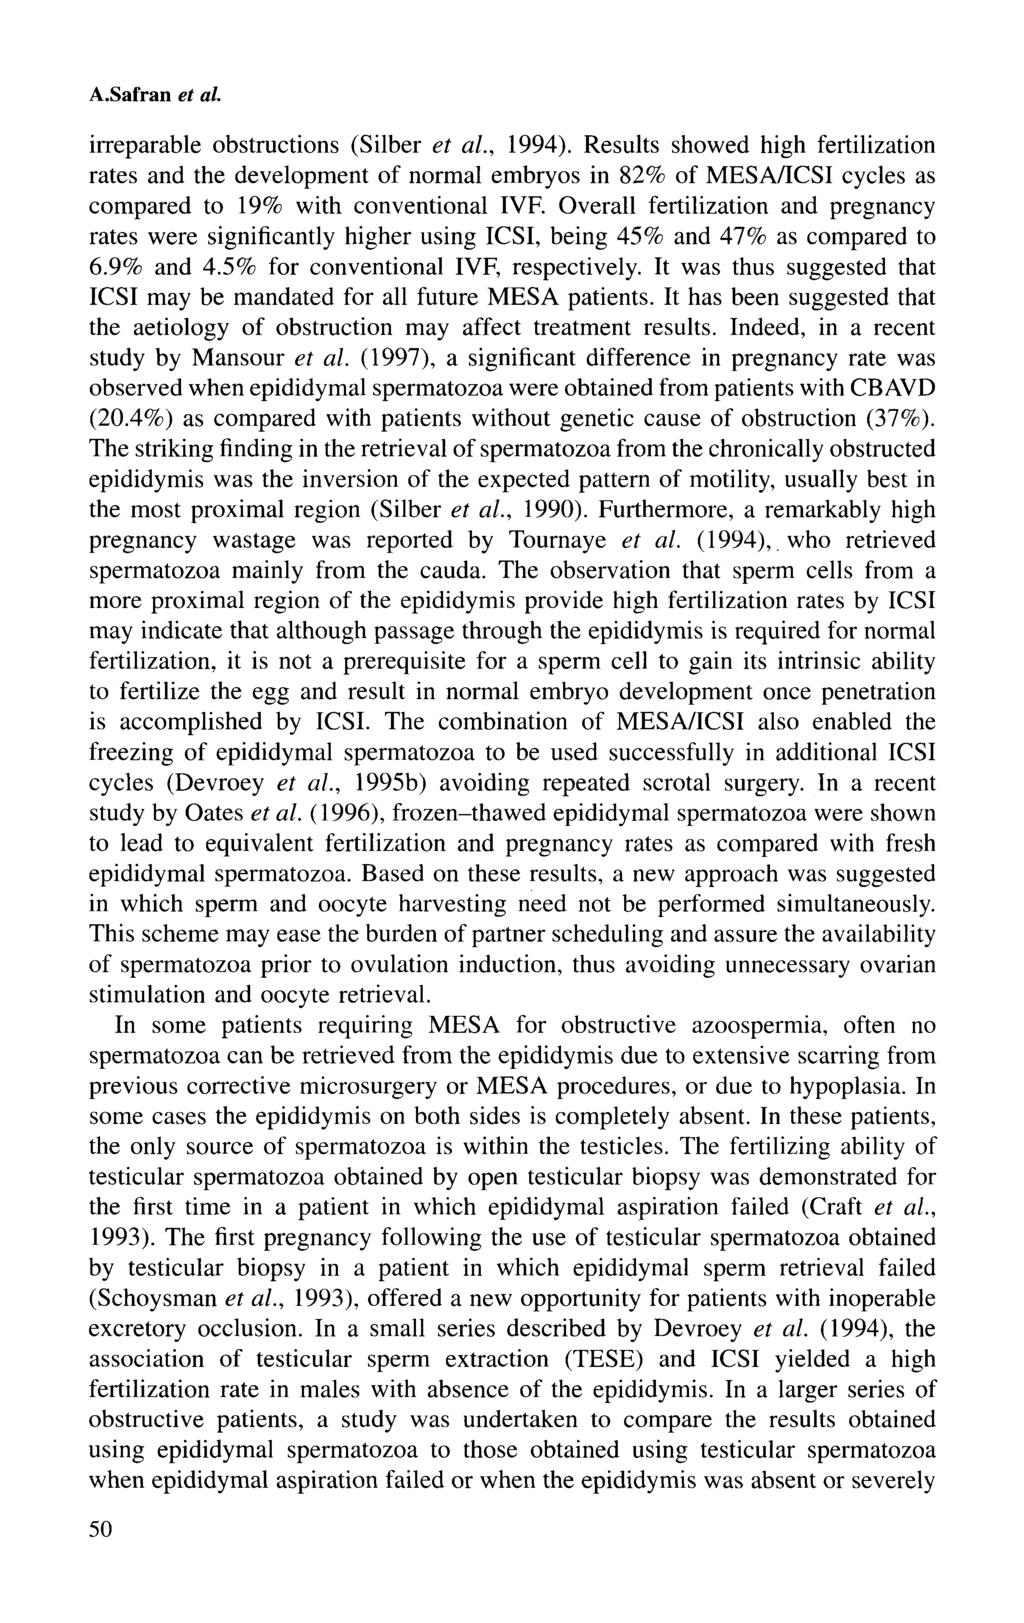 A.Safran et al. irreparable obstructions (Silber et al., 1994).